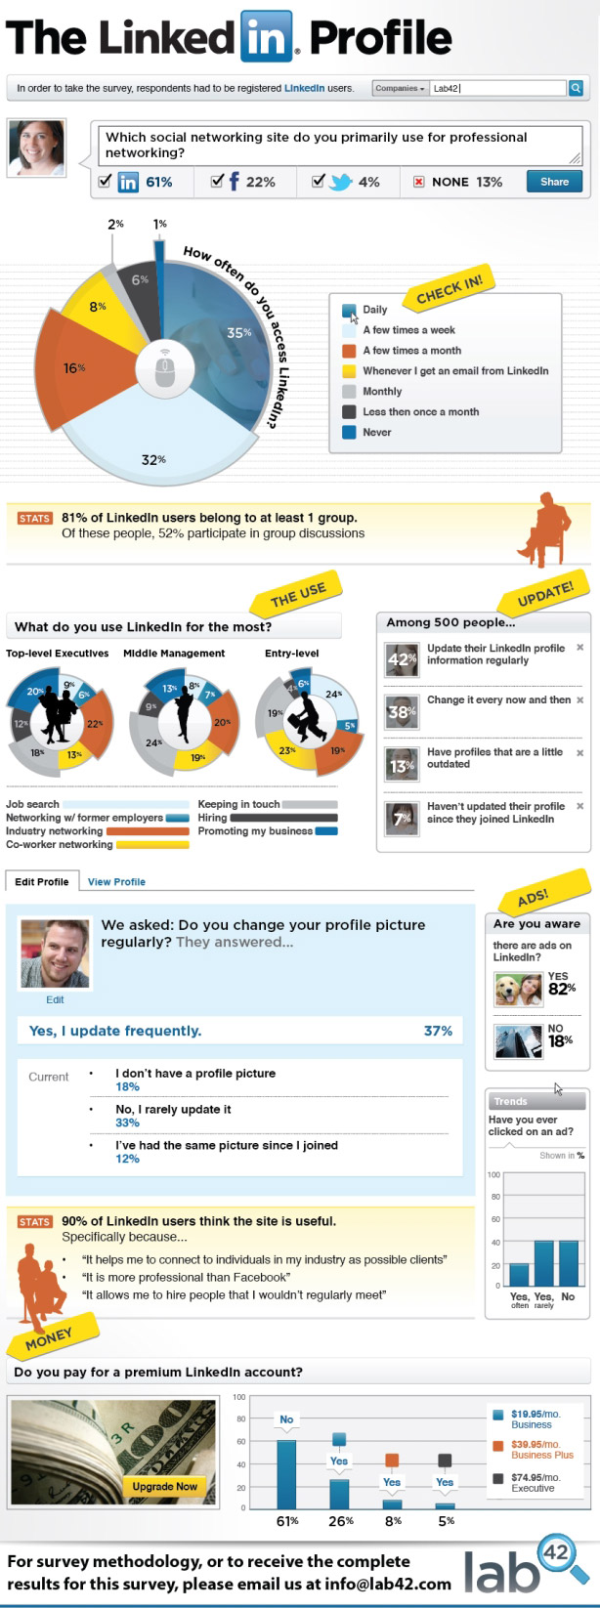 linkedin-infographic-resized-600